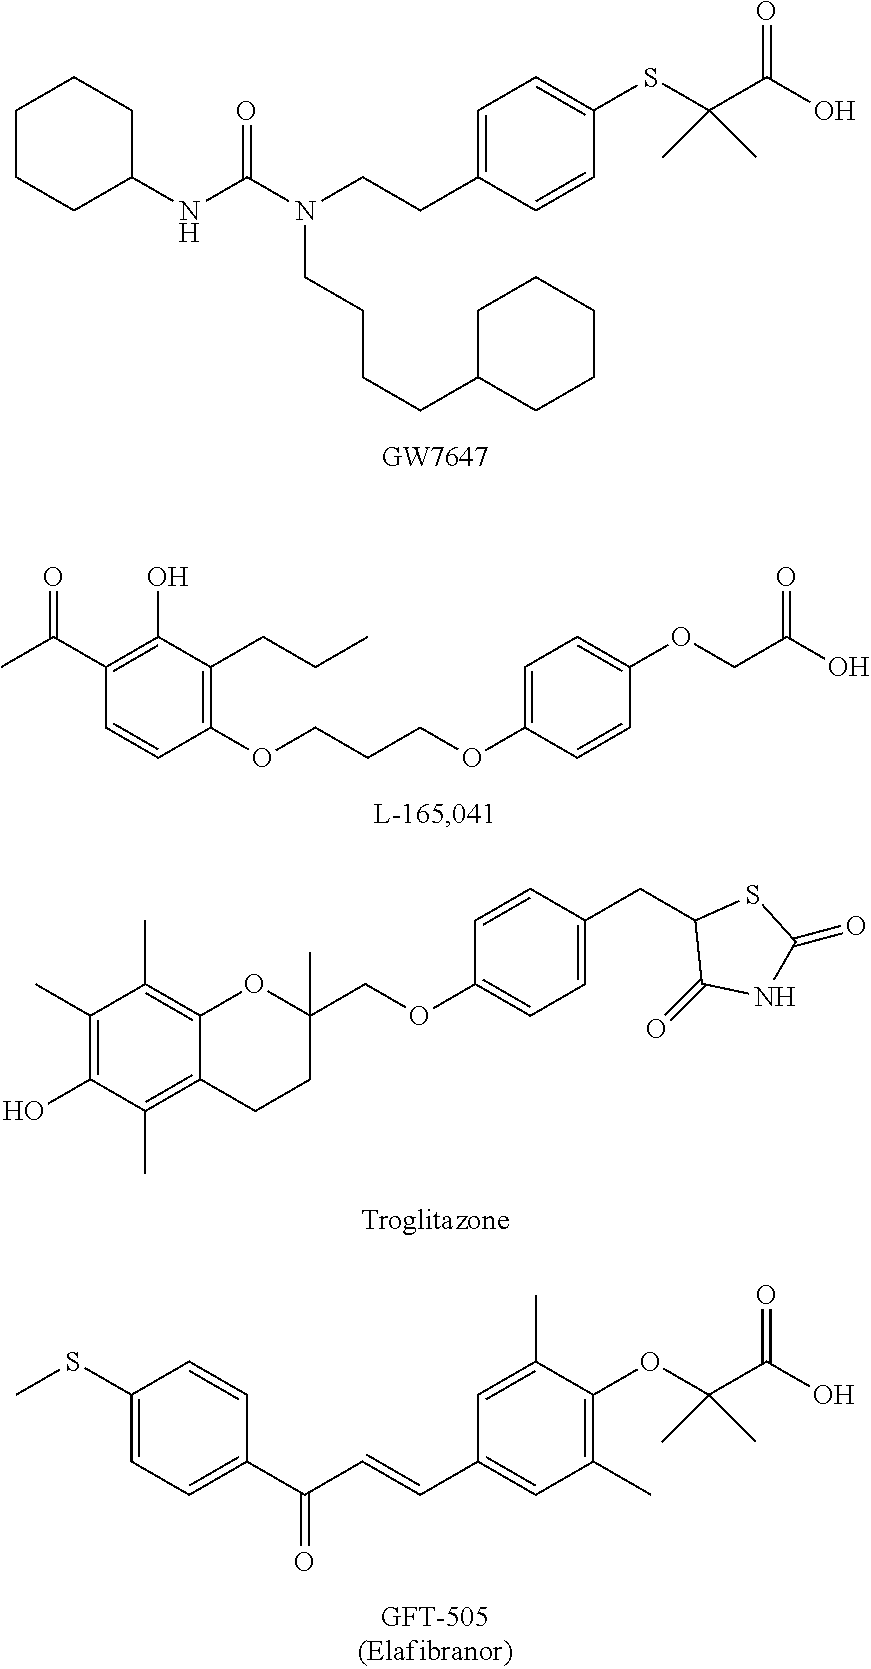 Pyrrolidine derivatives as PPAR agonists